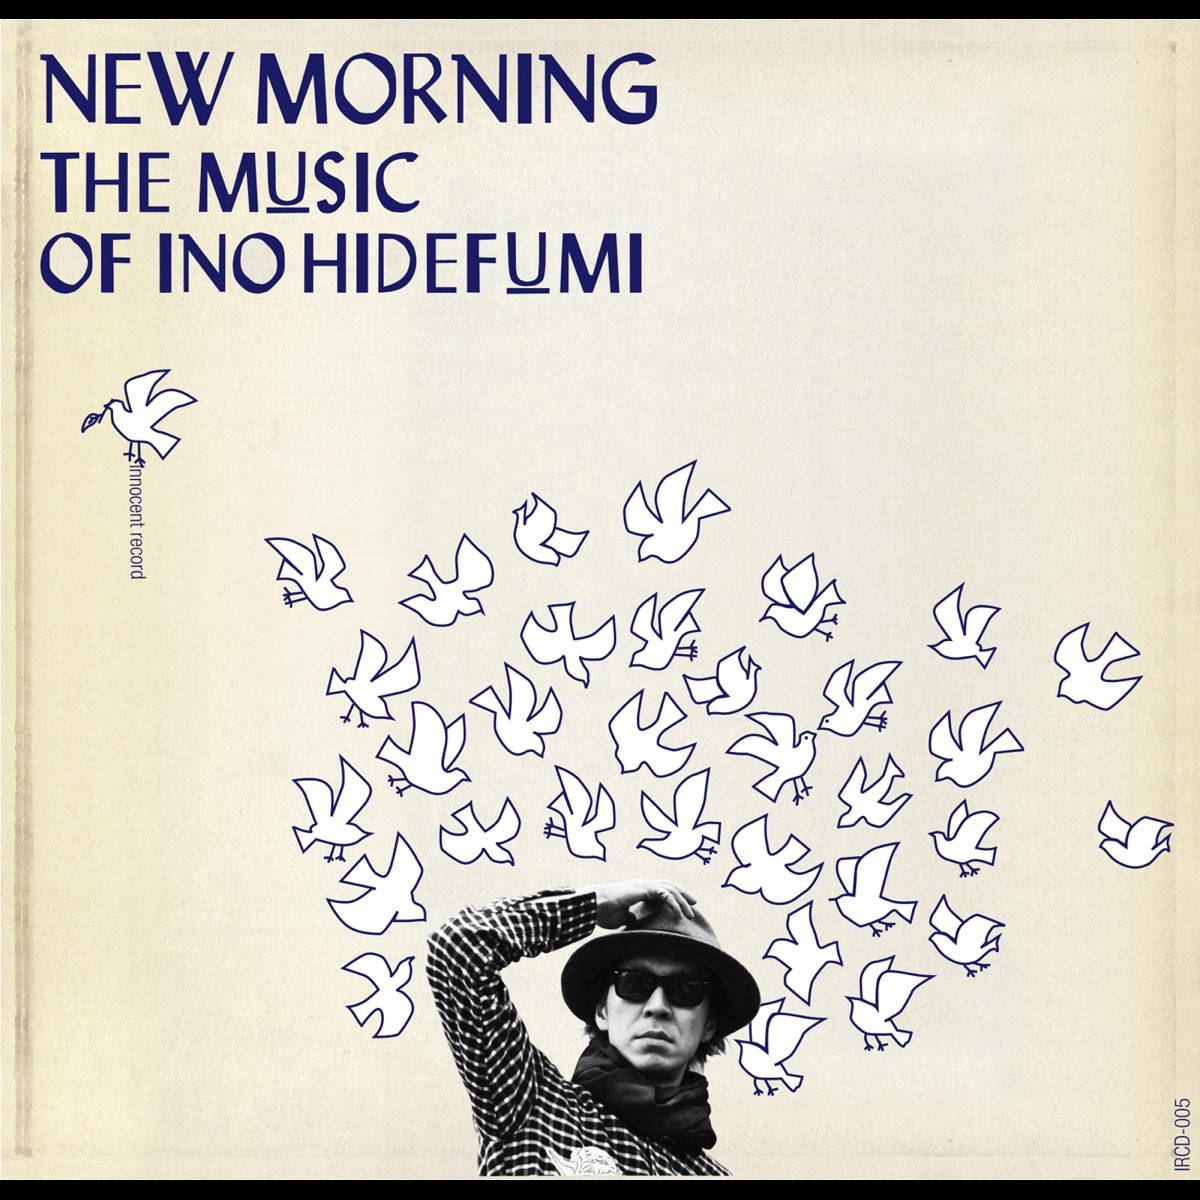 NEW MORNING - Album by INO hidefumi - Apple Music